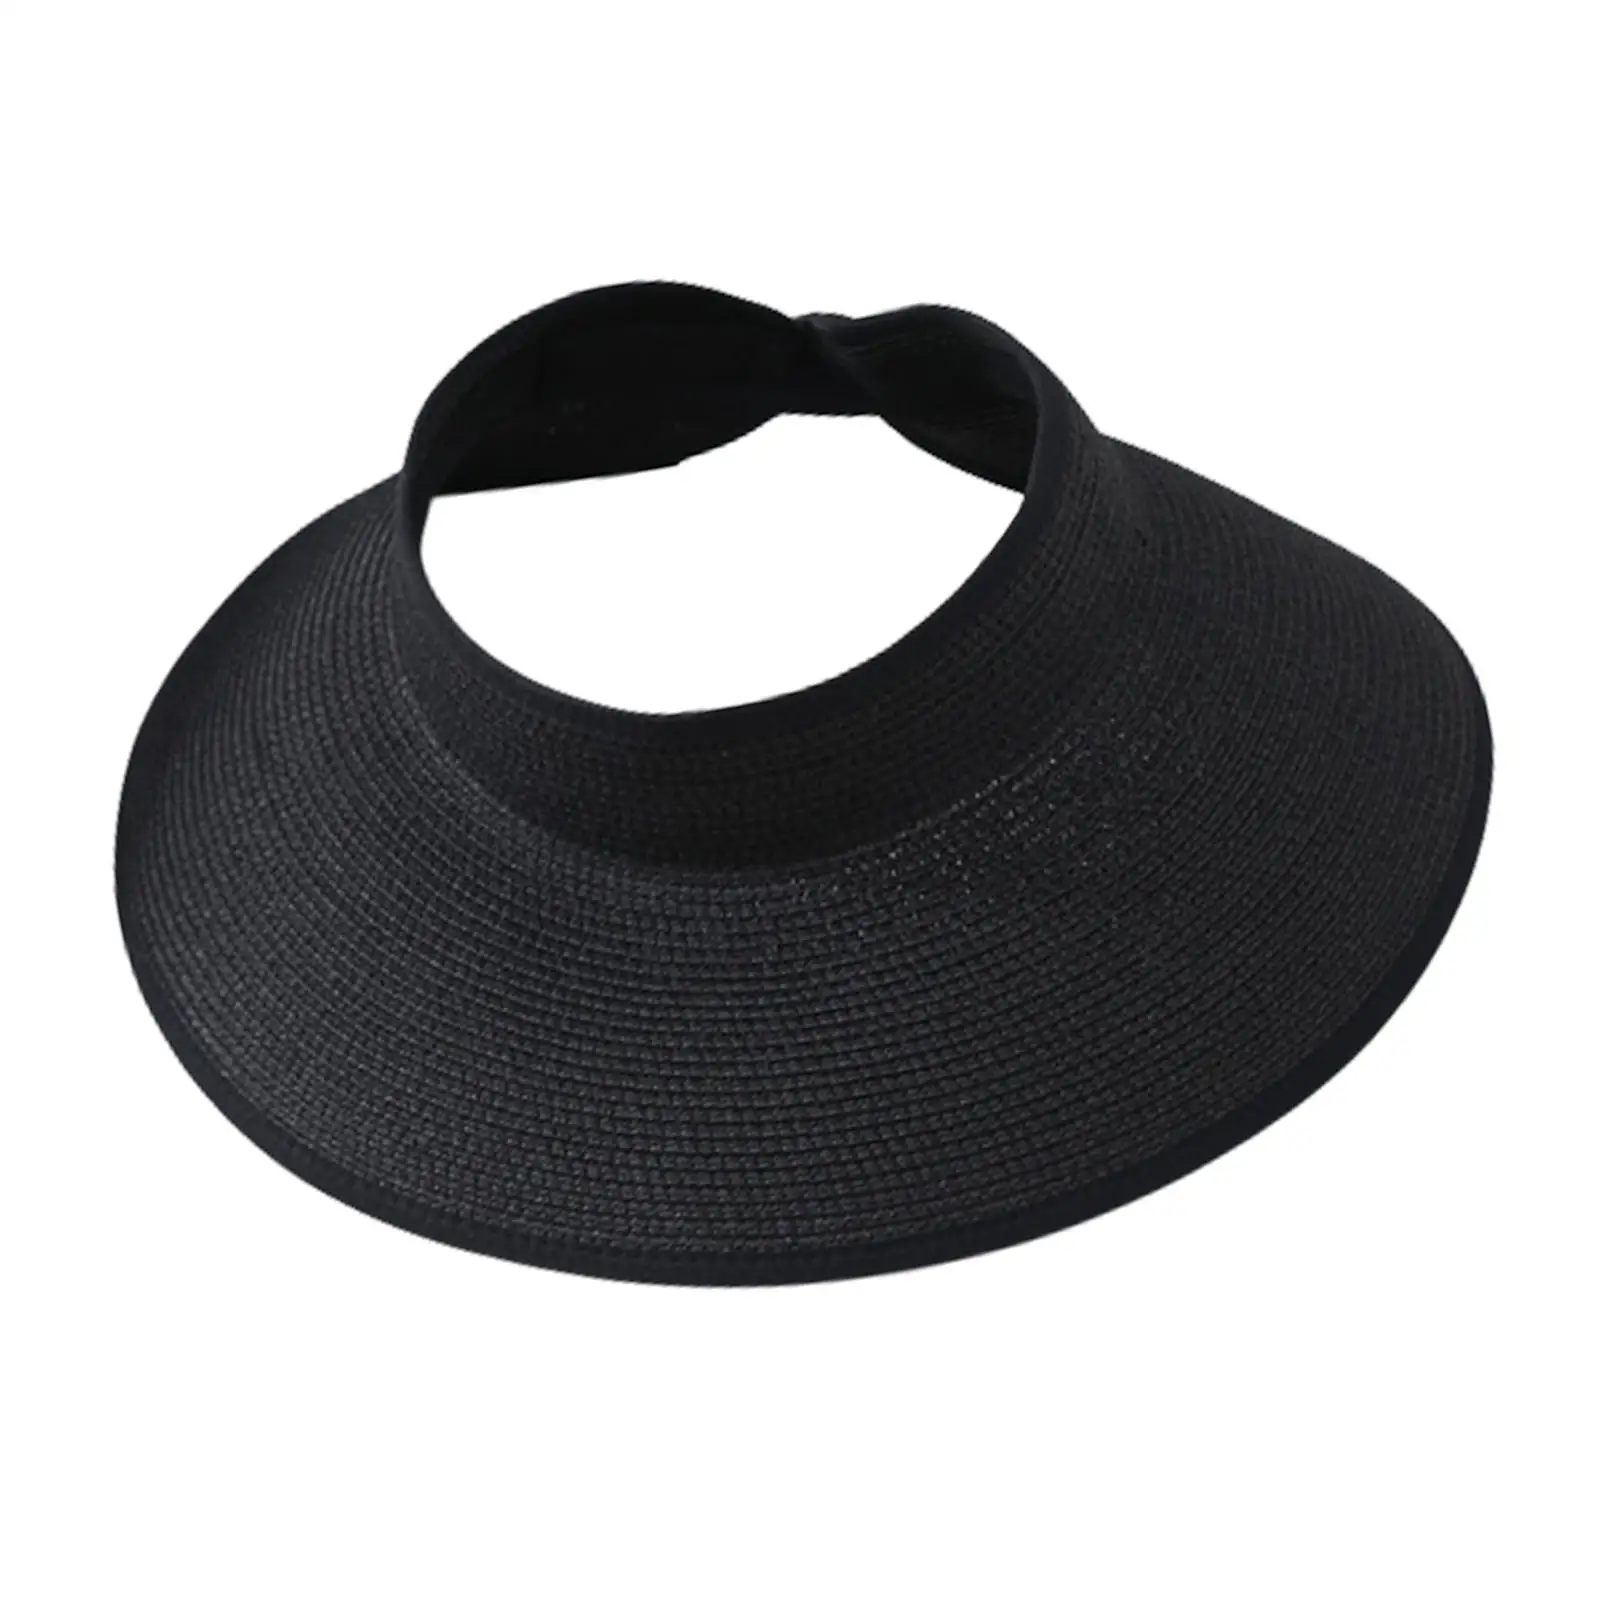 Women Straw Hat Wide Brim Durable Breathable Sunscreen Fisherman Caps Sunscreen Hat for Festivals Short Trips Beach Gift Girls